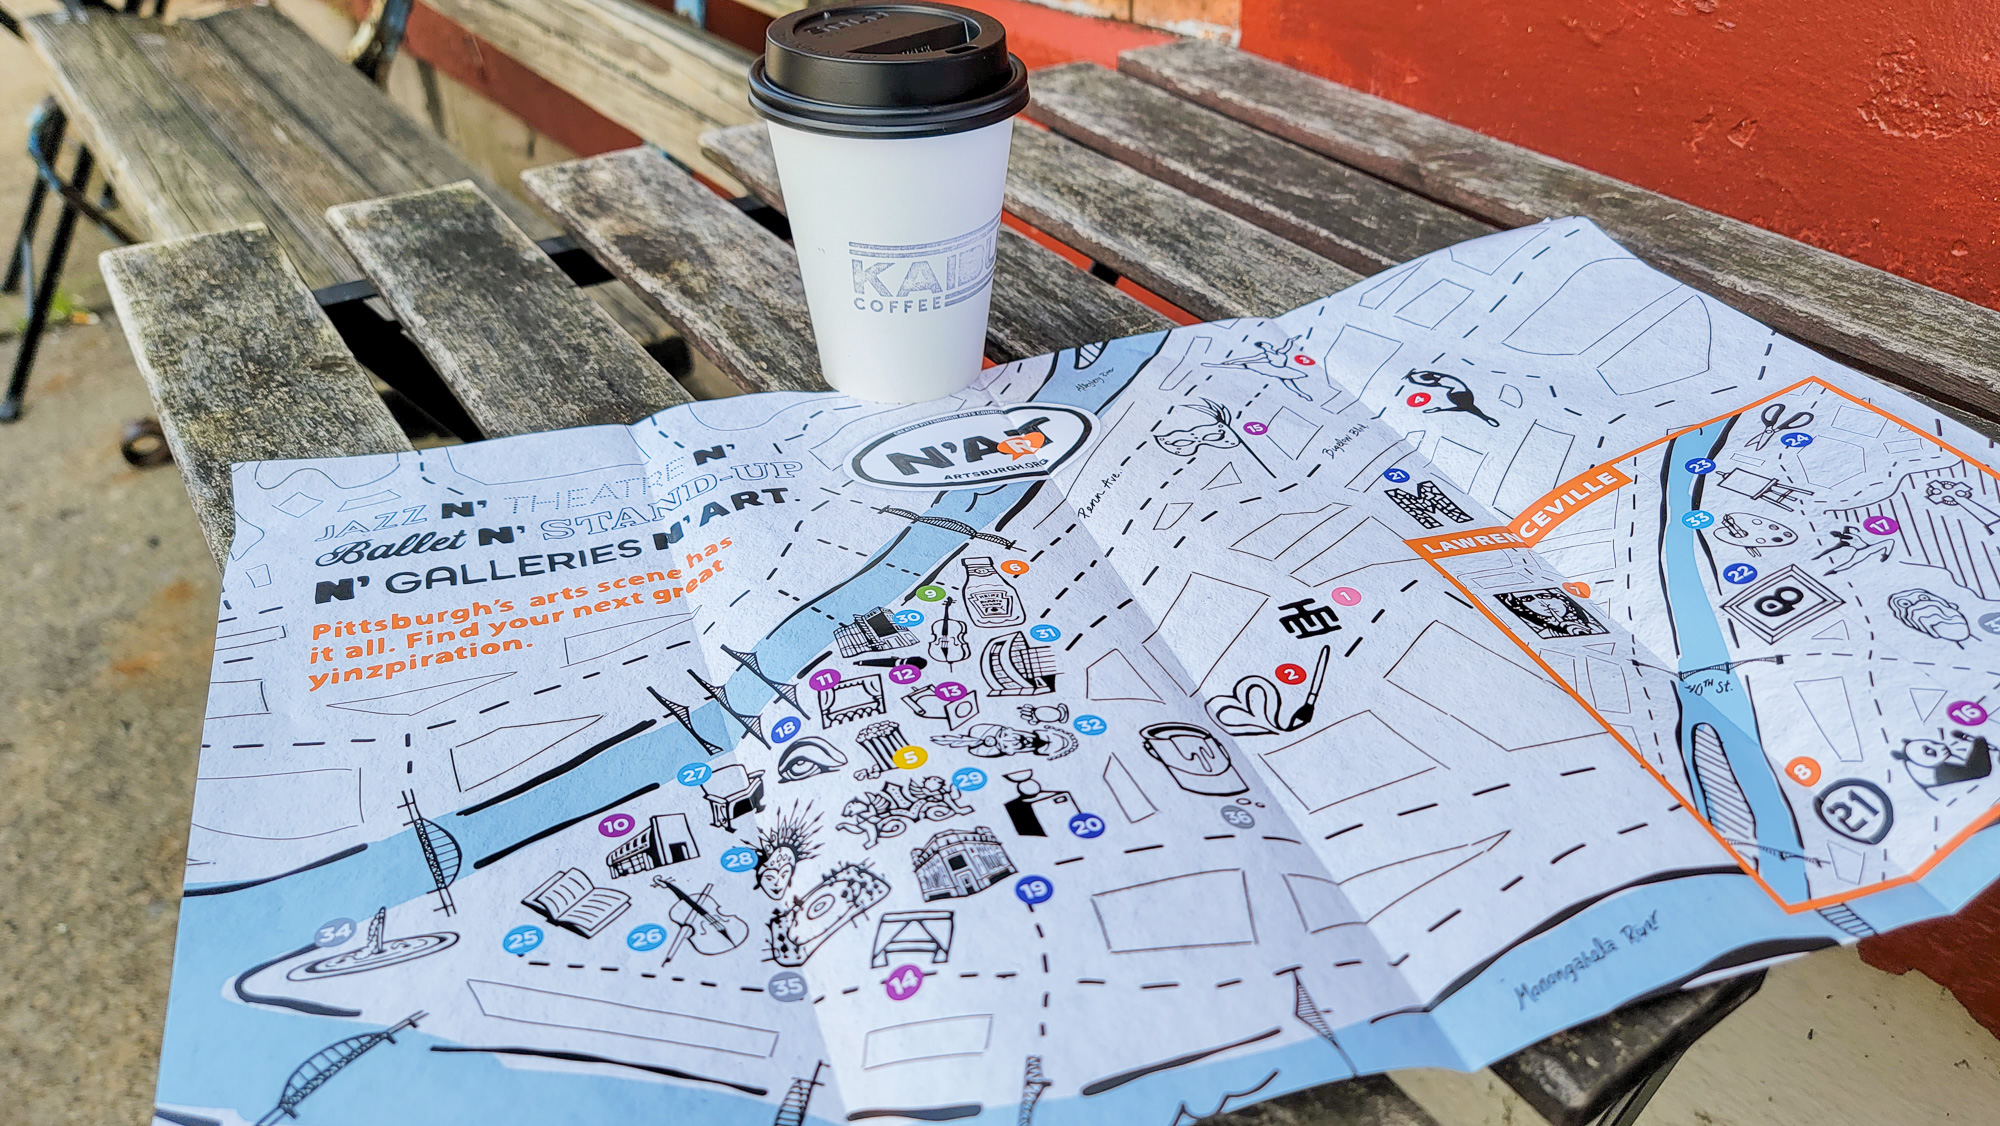 Artsburgh Map and Kaibur Coffee